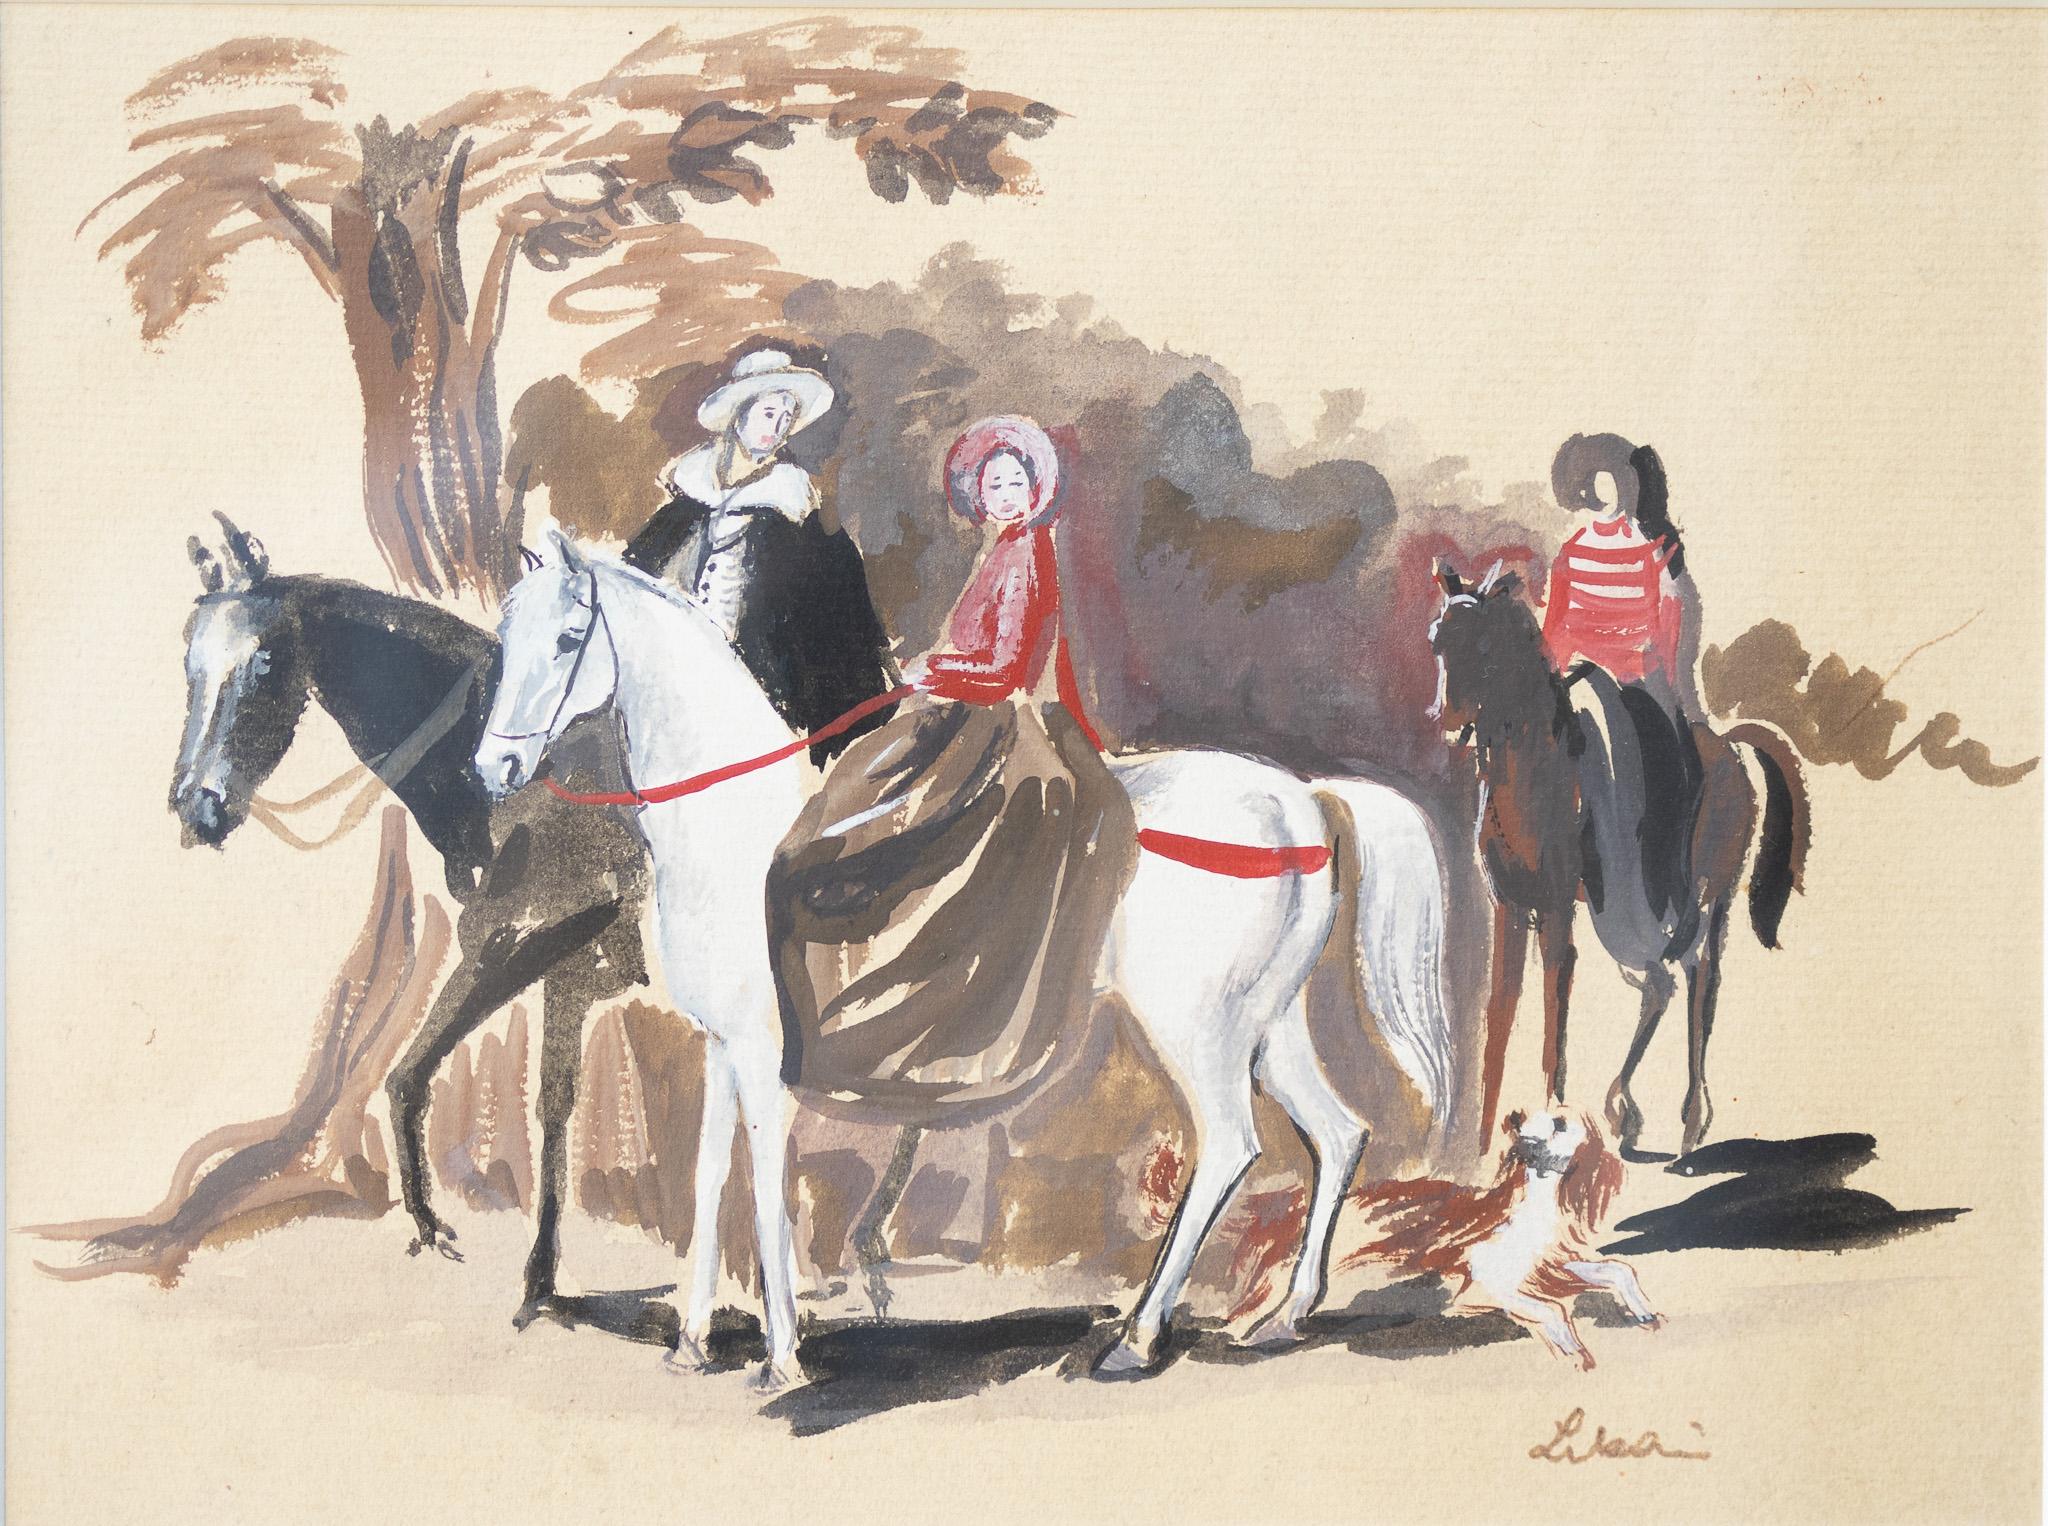 "People on Horseback" Eva Peron Mural Sketch